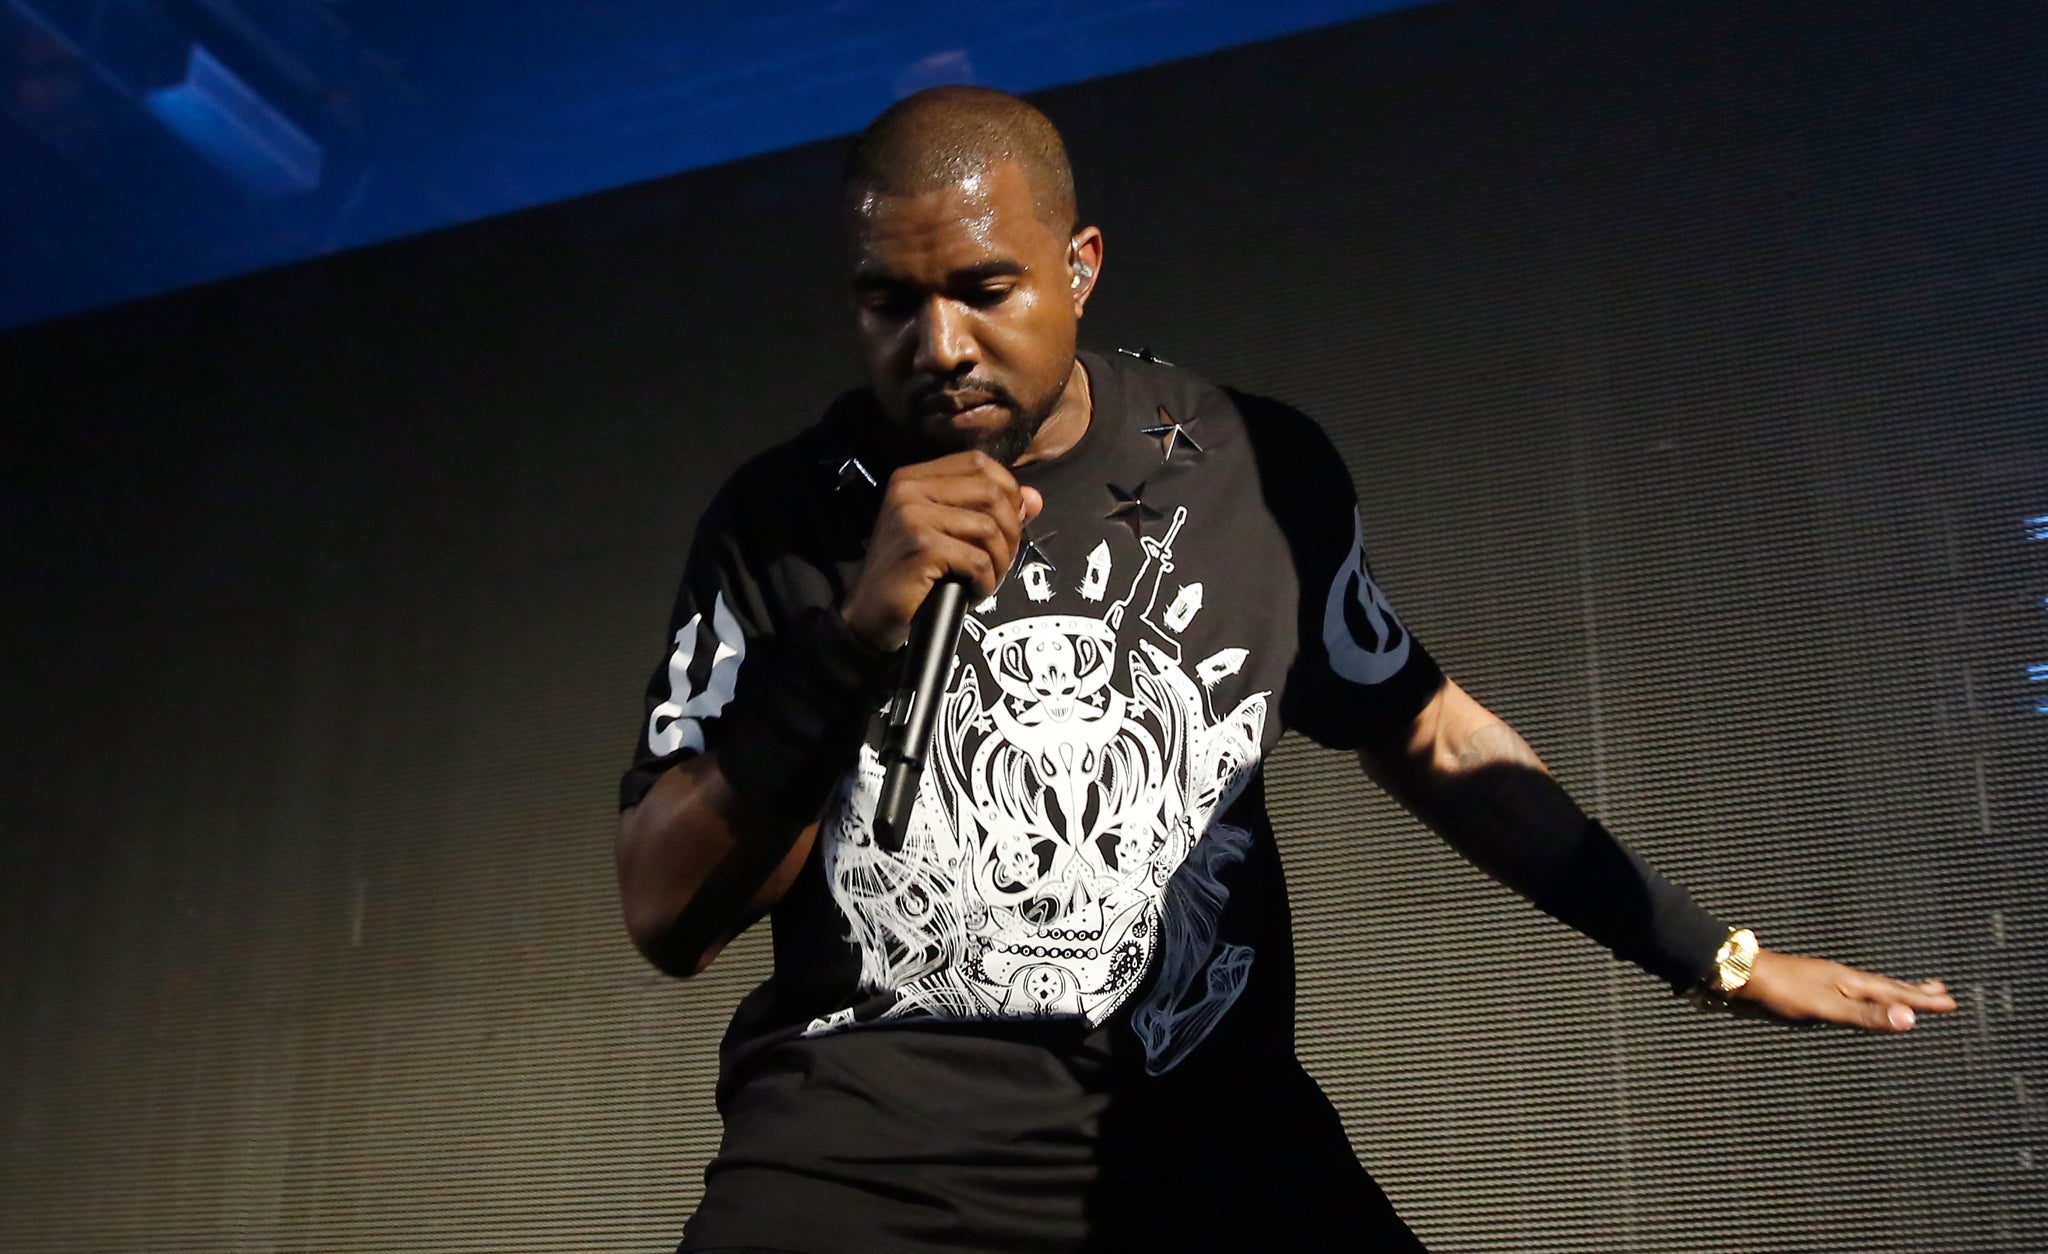 Kanye West performing at Koko, London